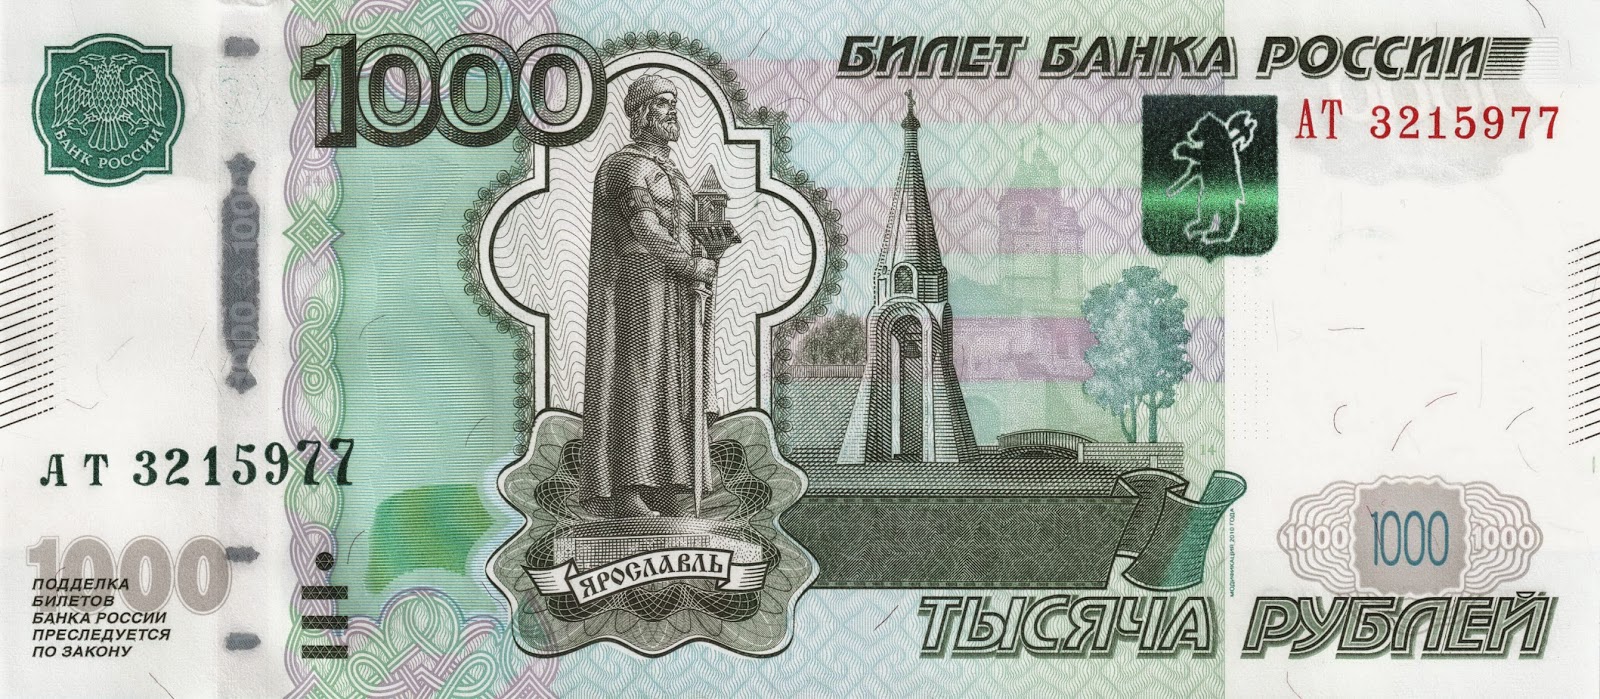 Steam 1000 рублей фото 66